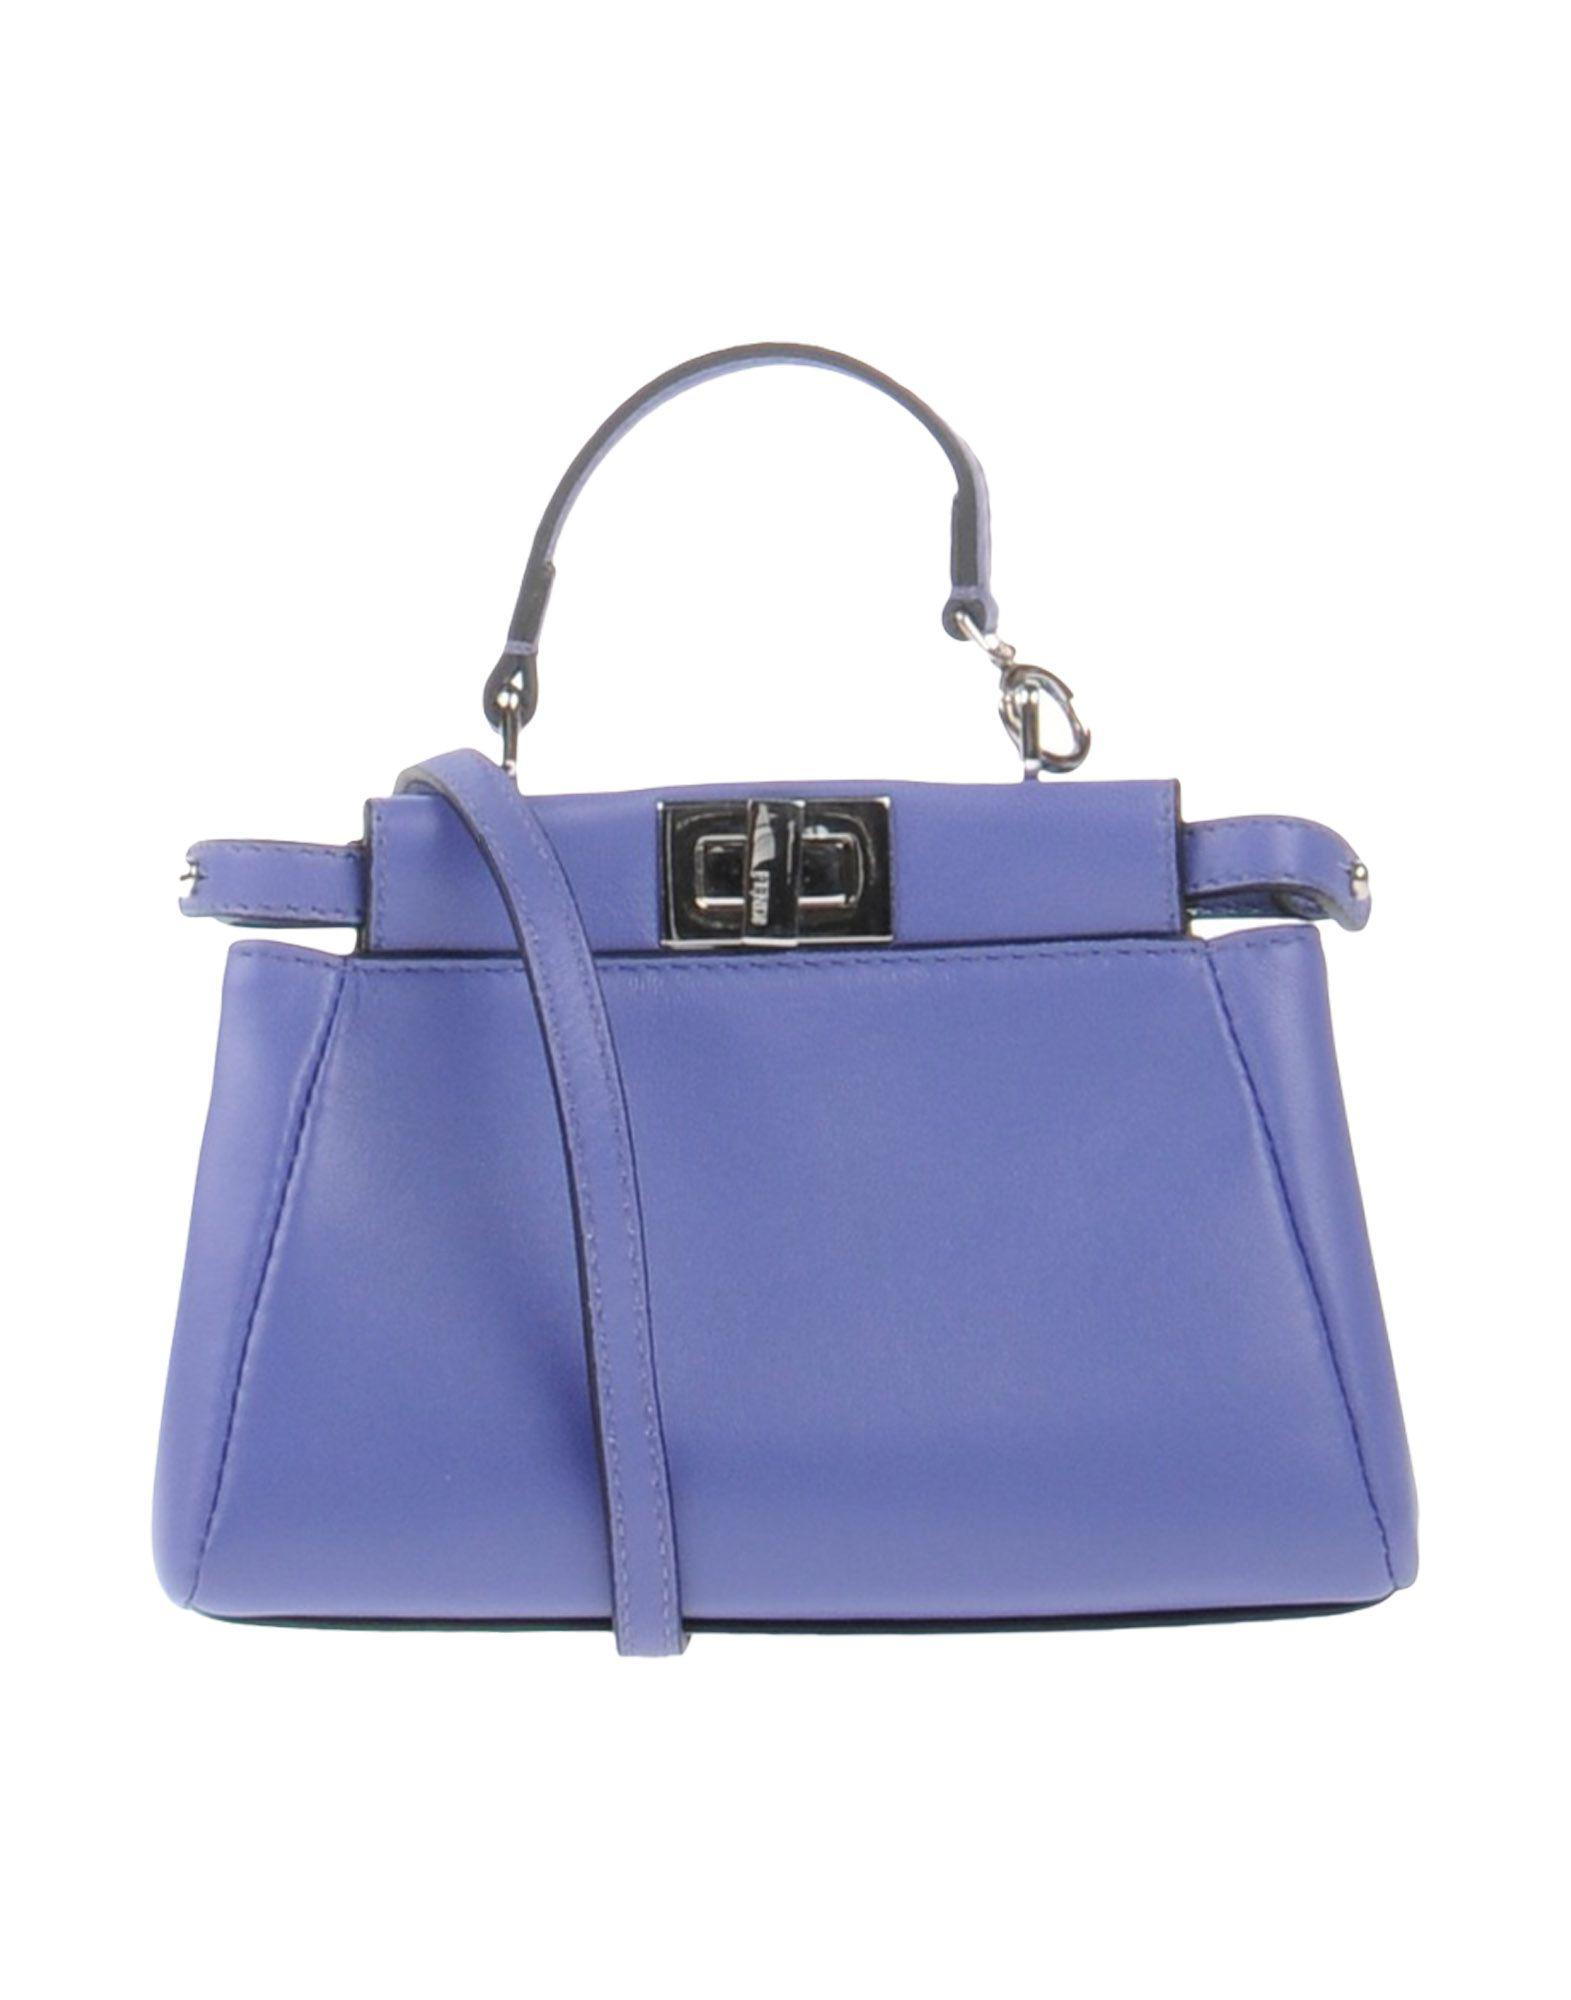 Fendi Leather Handbag in Purple - Lyst